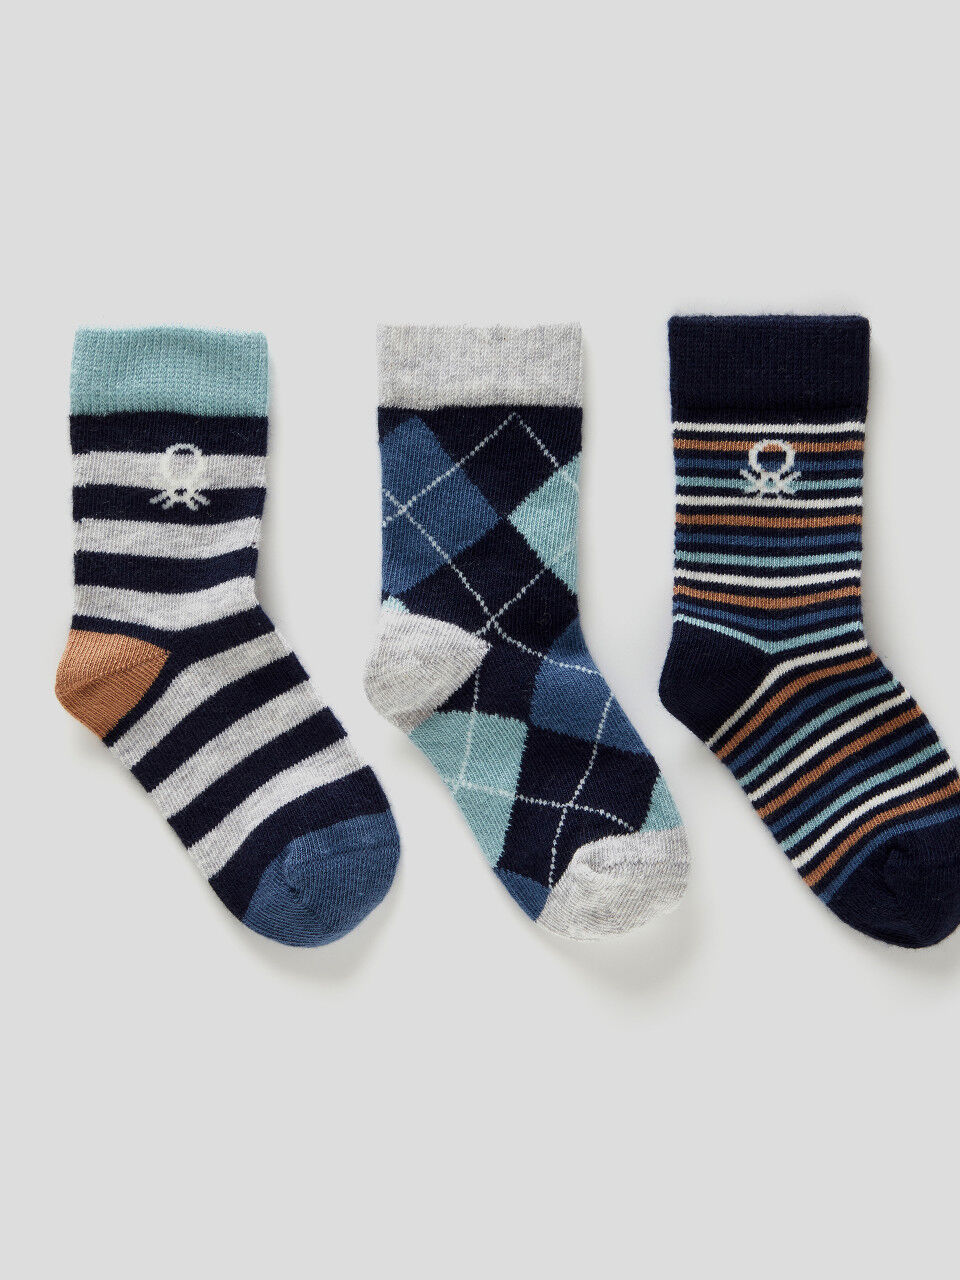 Three pairs of socks with jacquard pattern